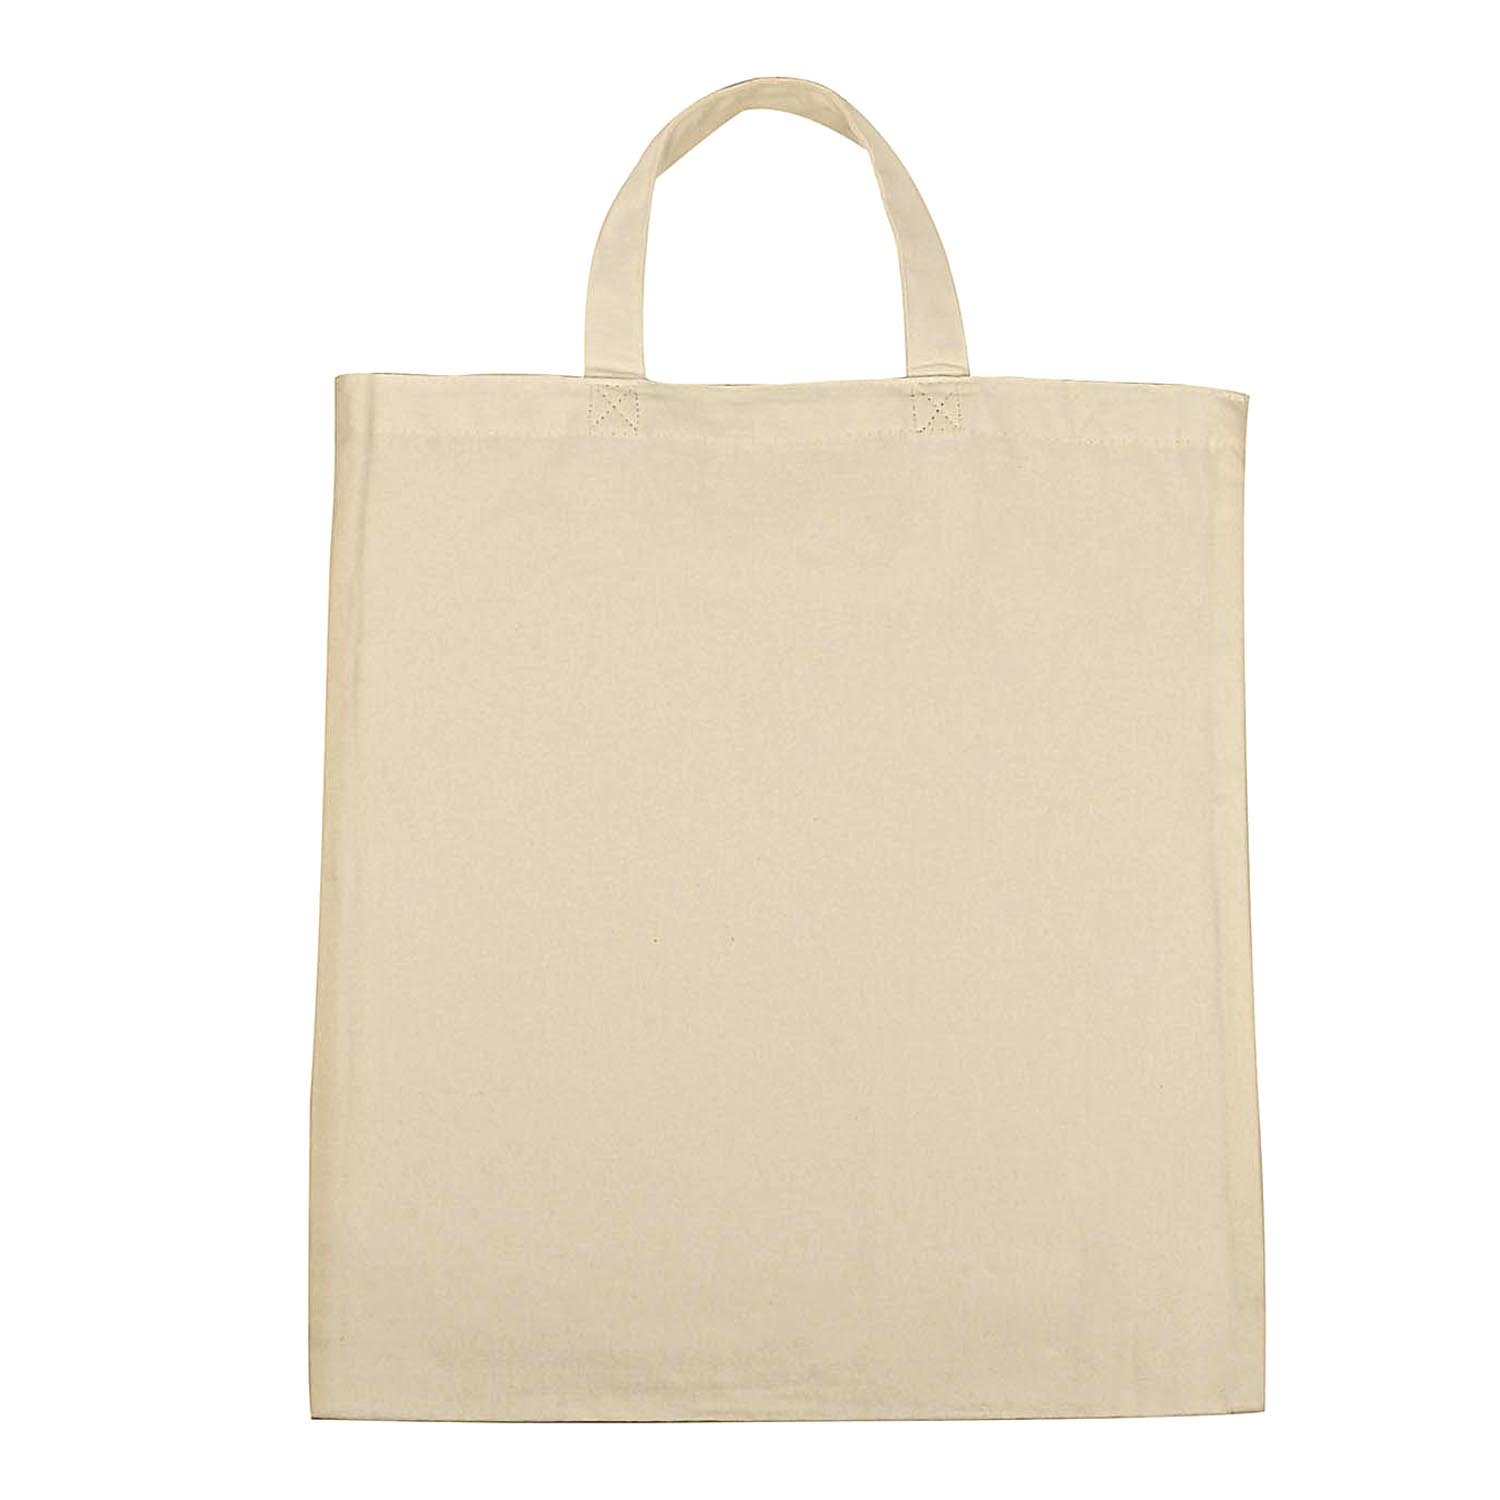 Cotton Shopping Bag: Order now